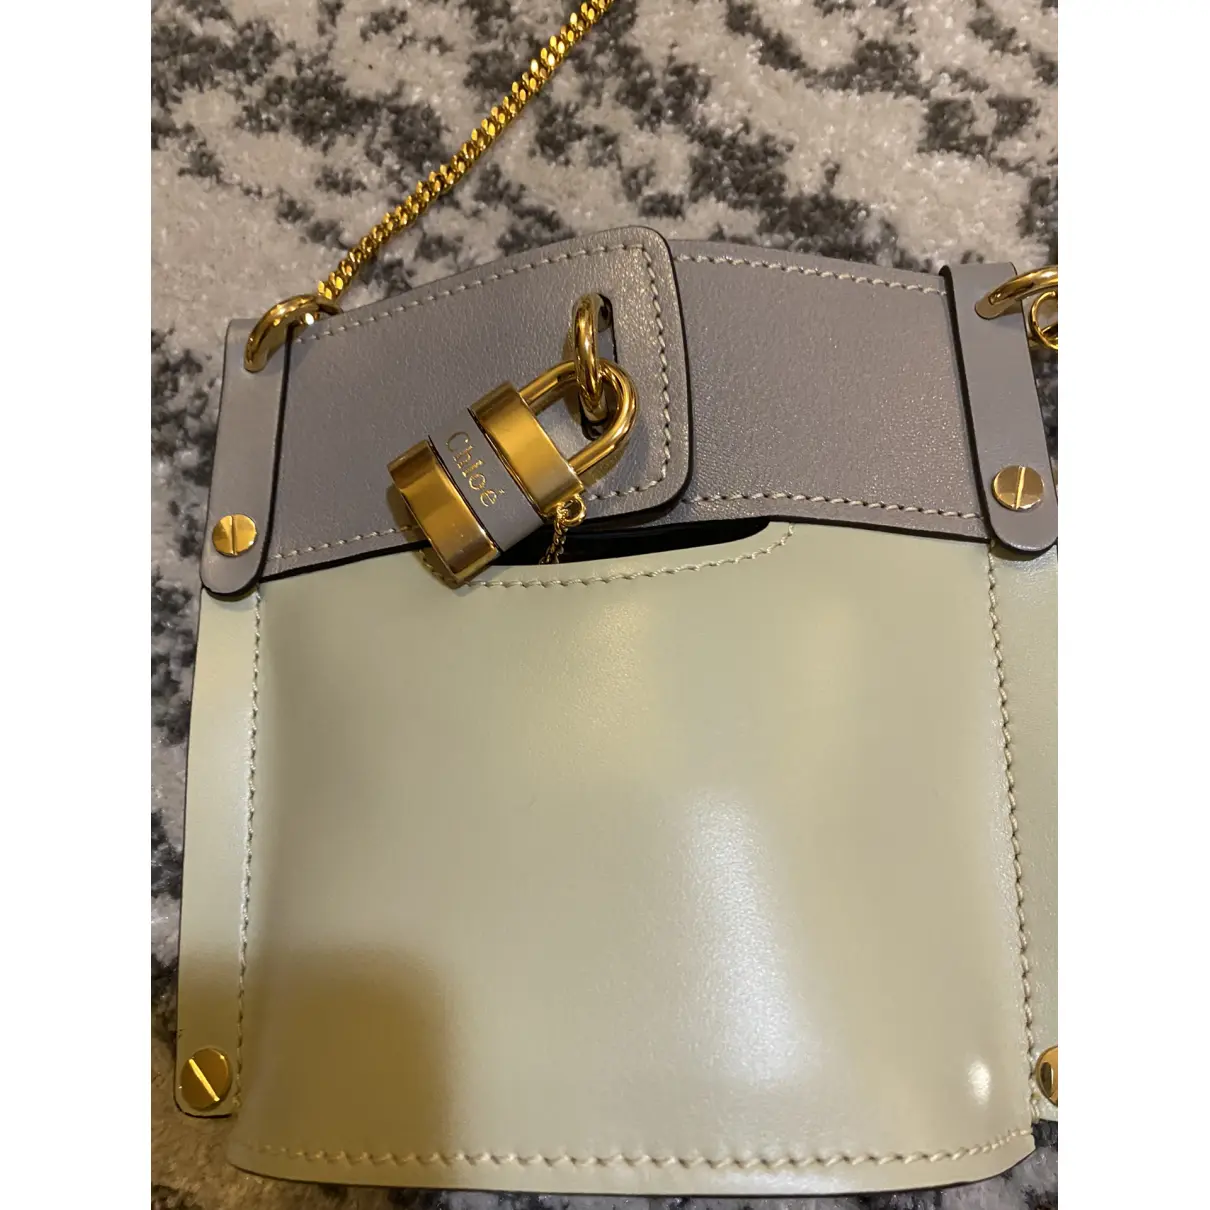 Buy Chloé Aby Lock leather handbag online